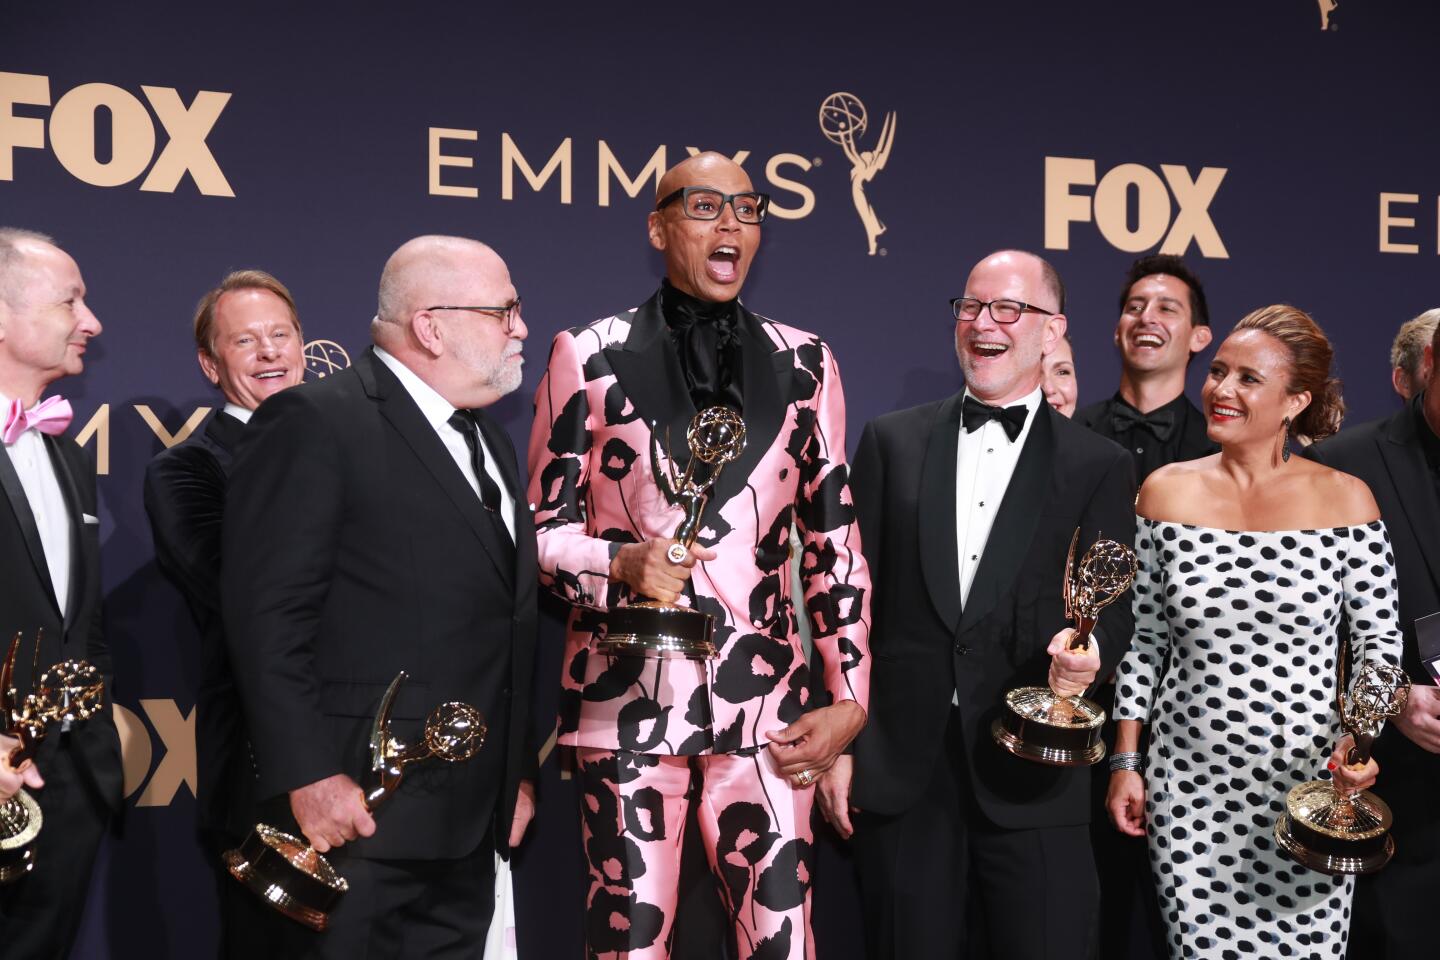 Emmys 2019 Deadline Room